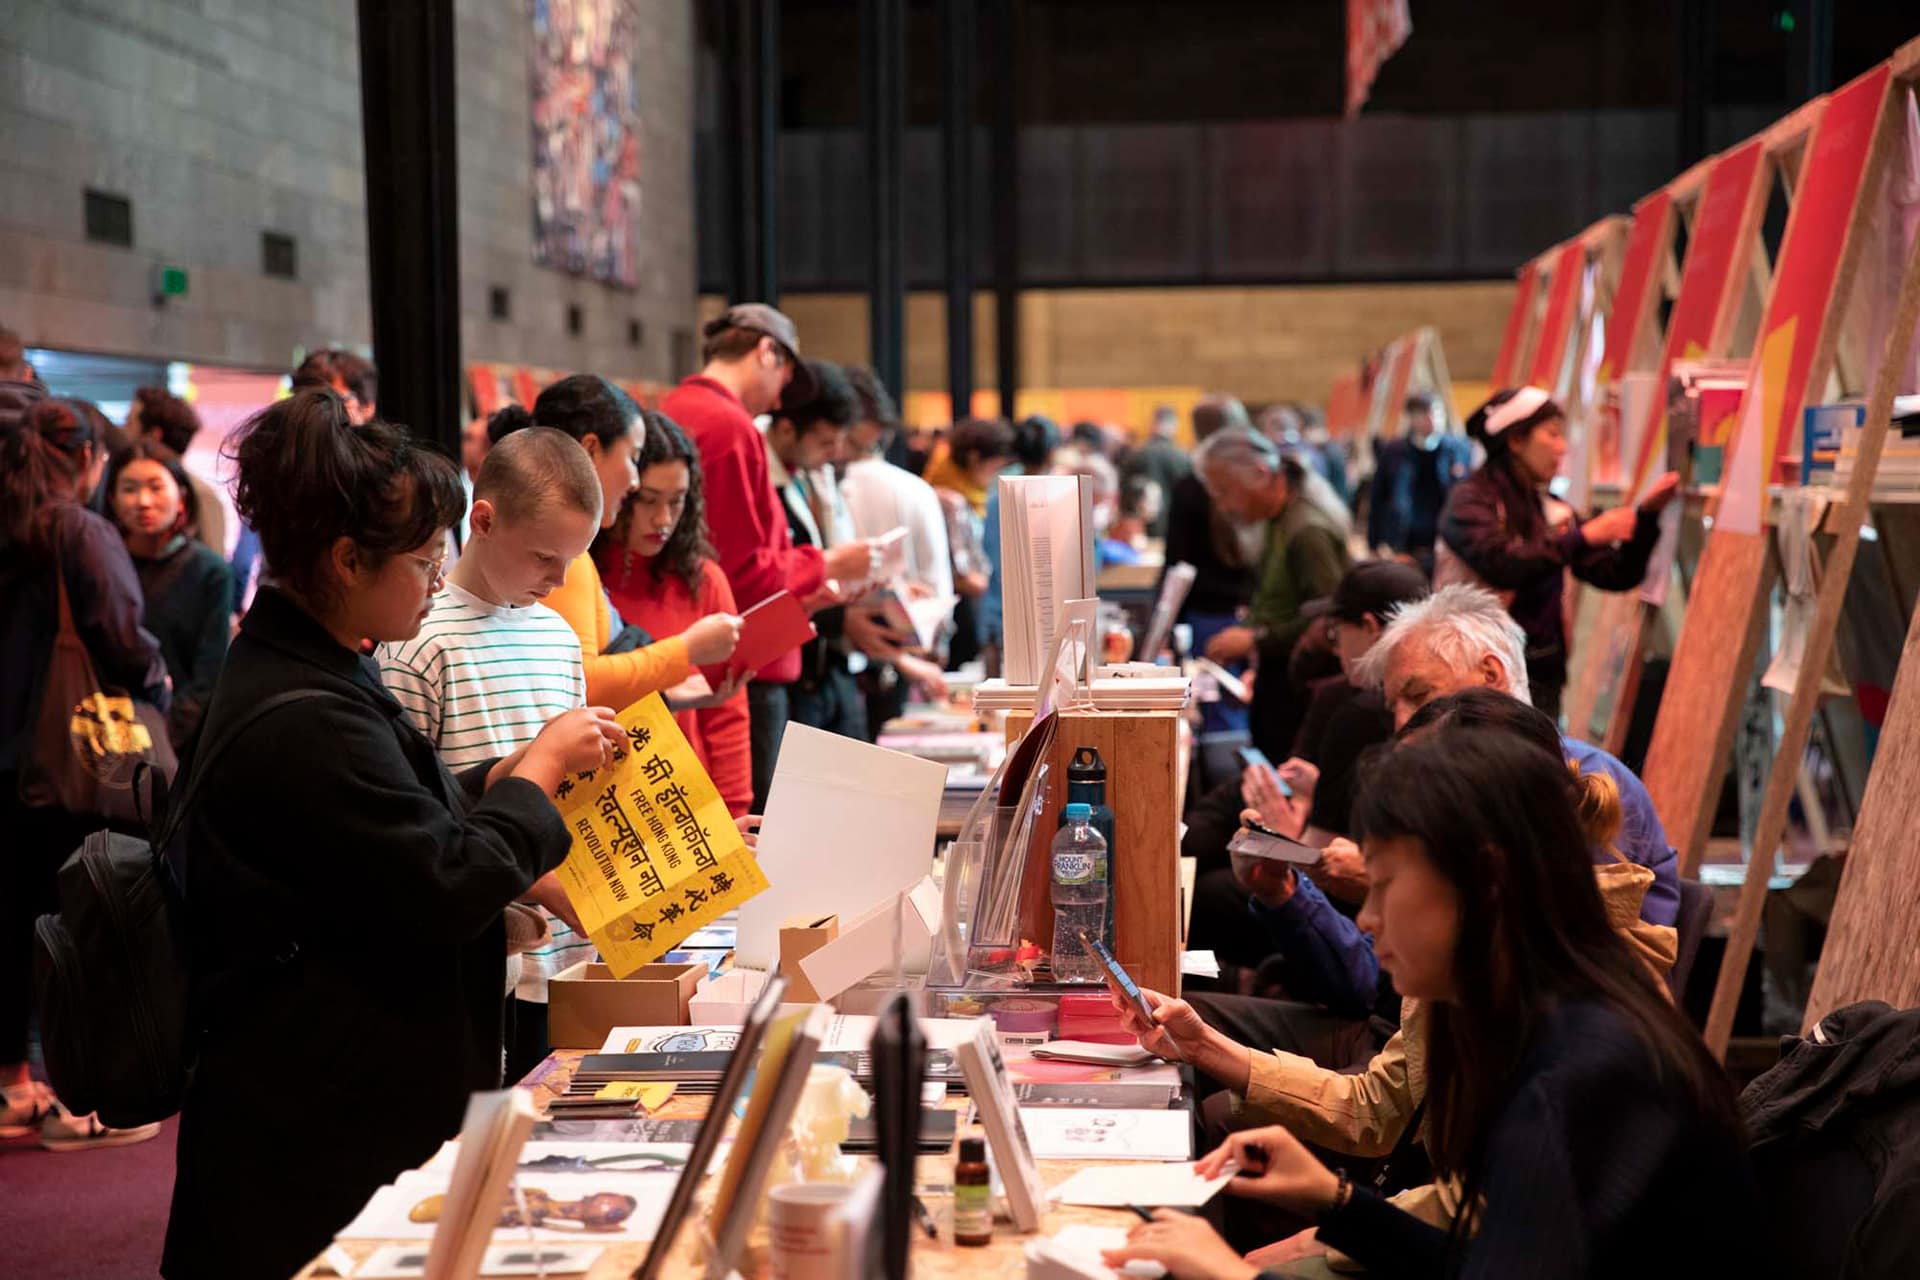 Patrons exploring the Melbourne Art Book Fair, NGV Great Hall, Melbourne Art Book Fair 2020. Photo: Tobias Titz